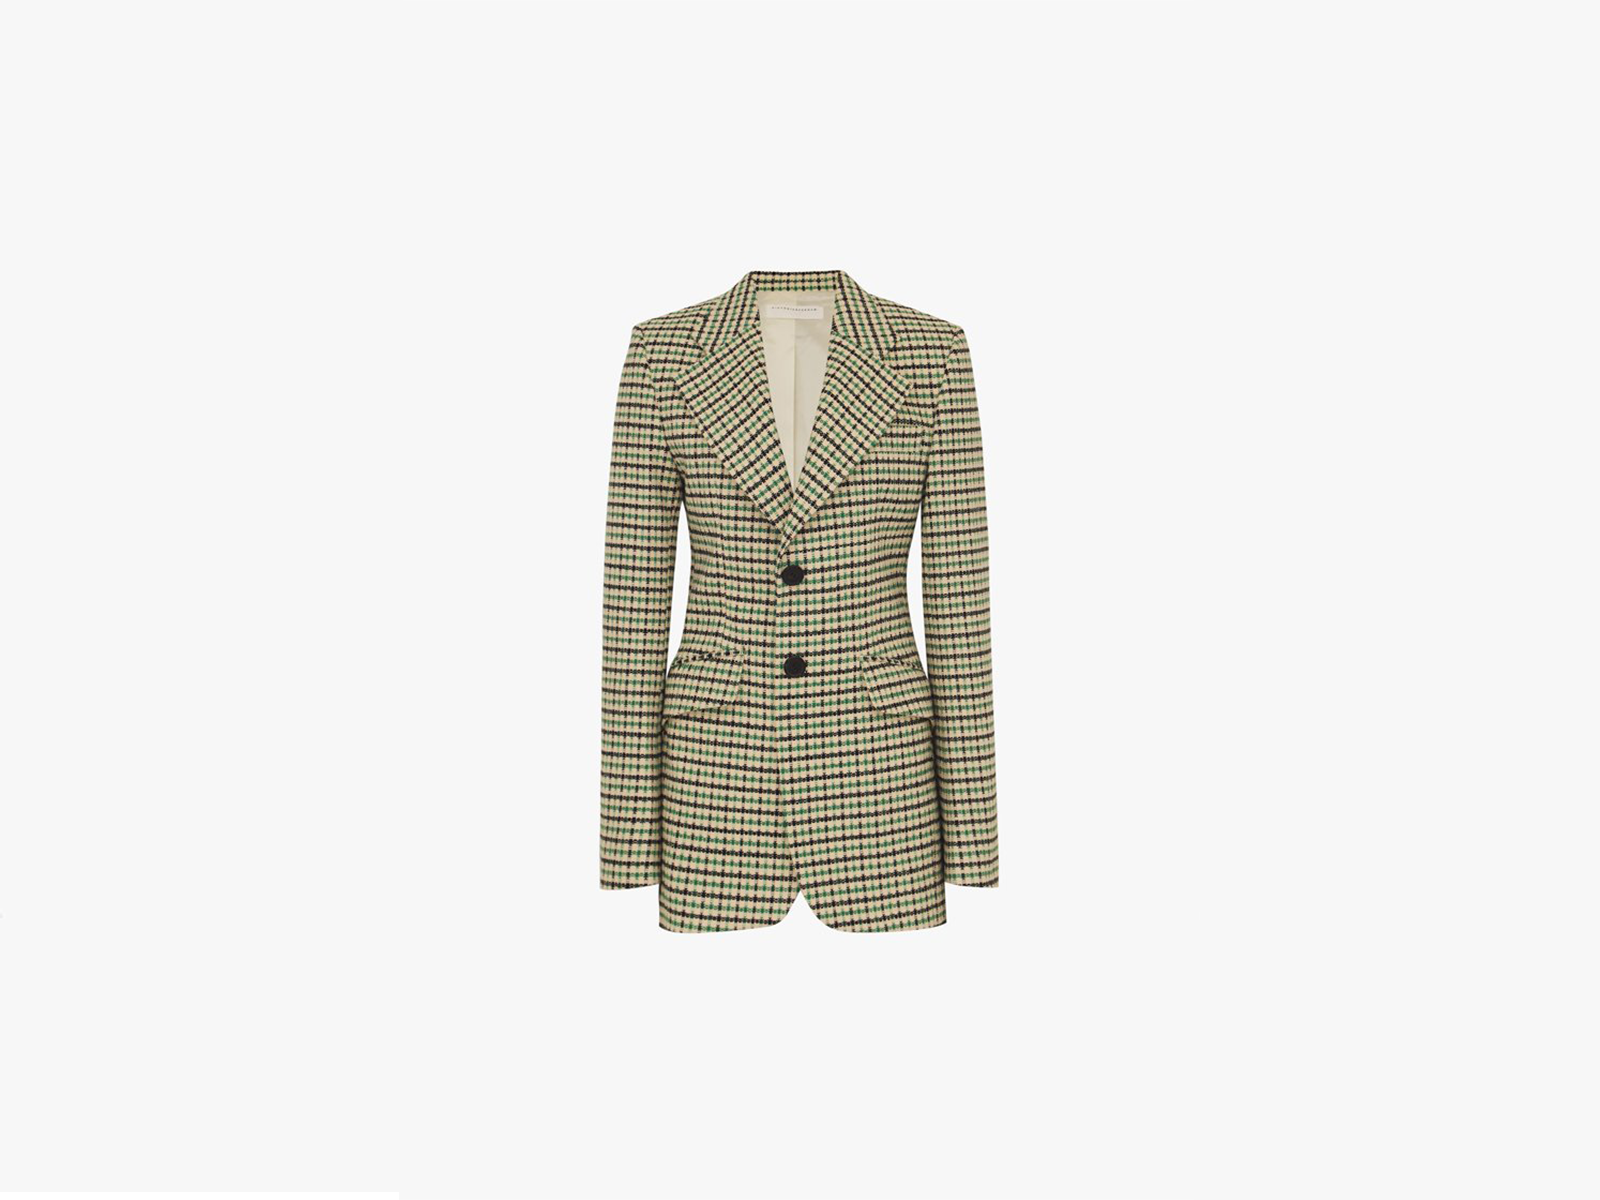 Victoria Beckham Jarvis Tailored Jacket in Speckled Tweed